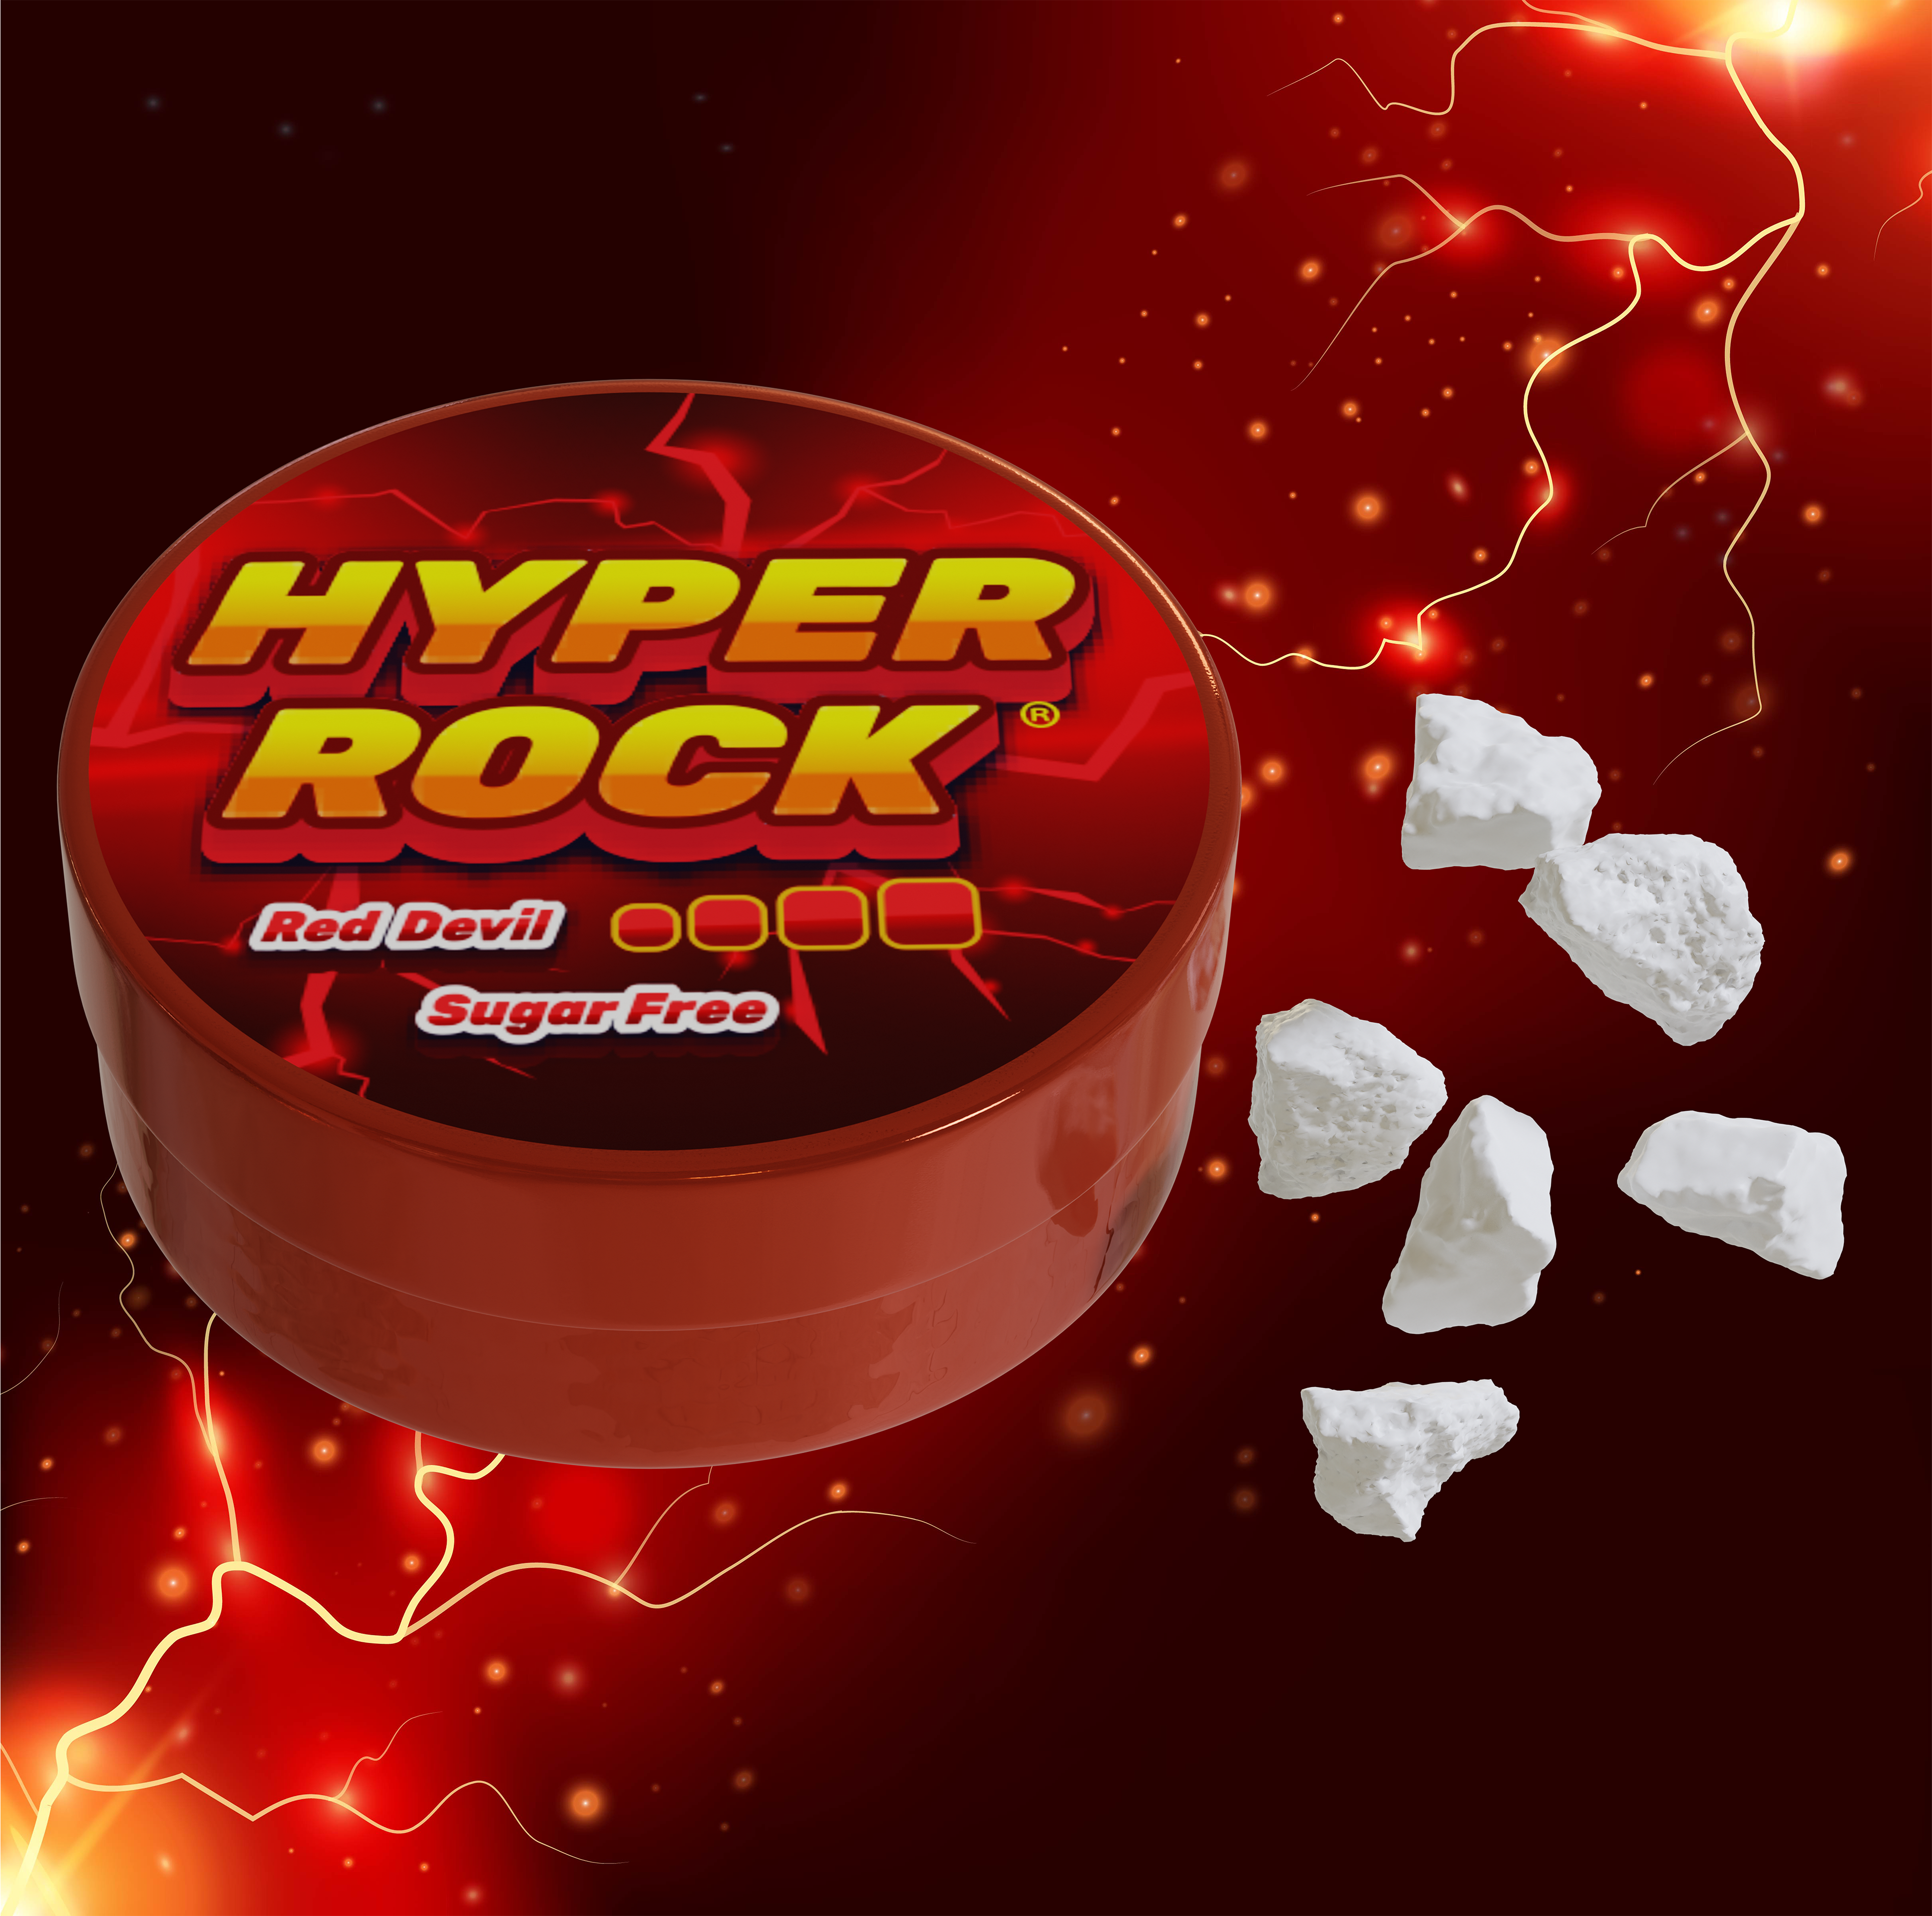 Hyper Rock Red Devil